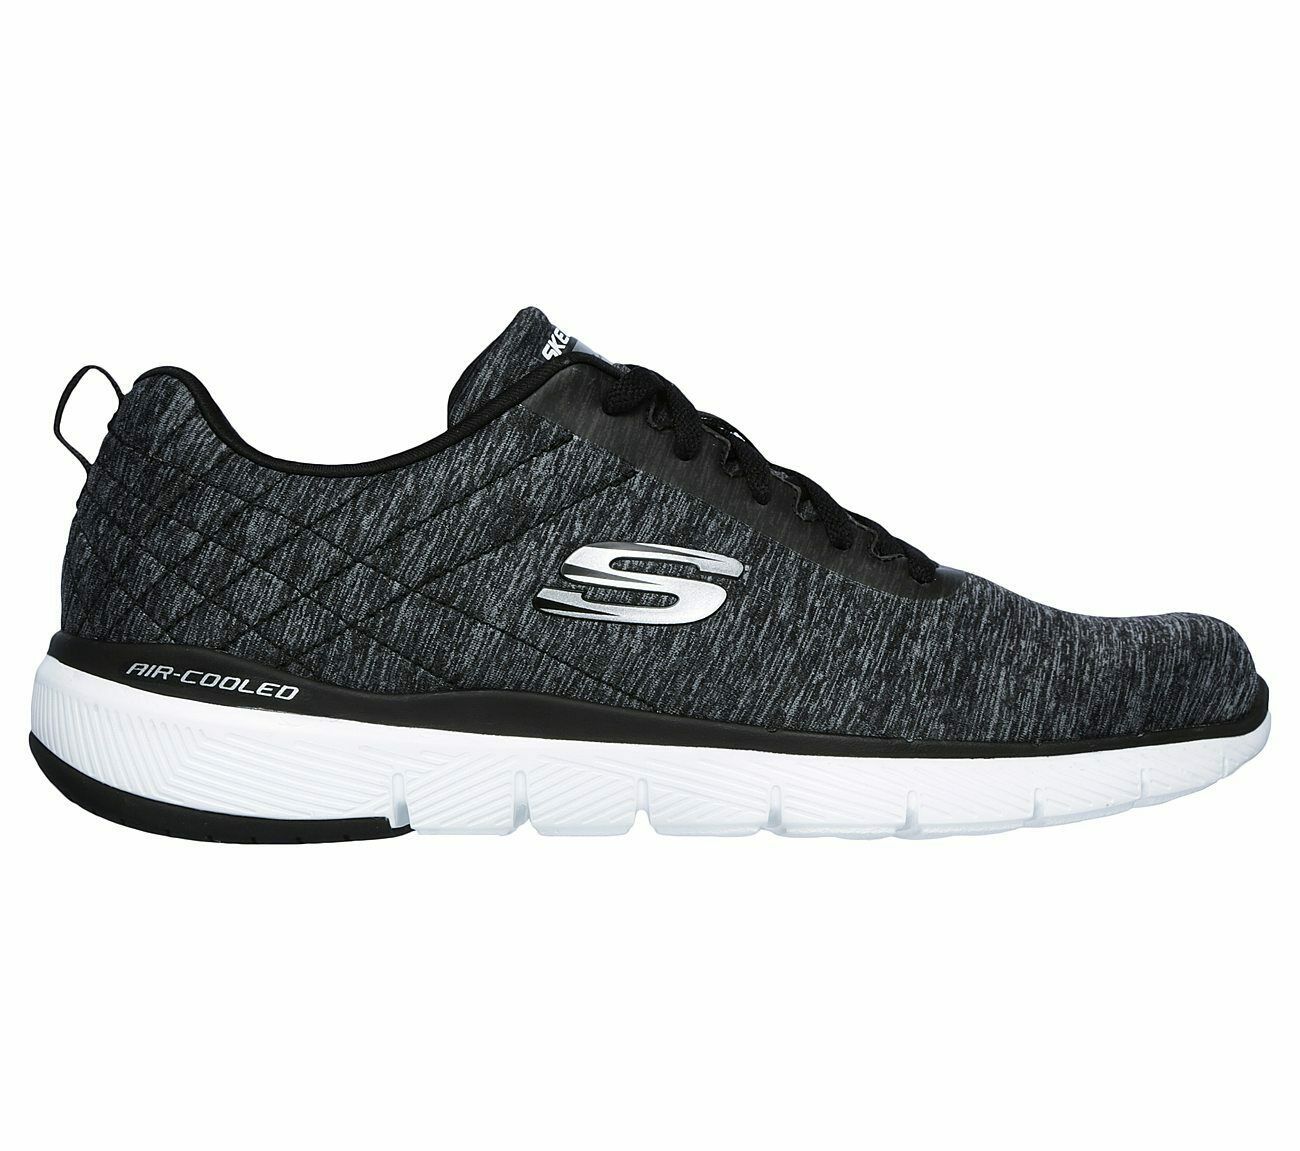 Skechers Black shoes Men's Memory Foam Sporty Comfort Casual Athletic Mesh 52956 - Casual Shoes